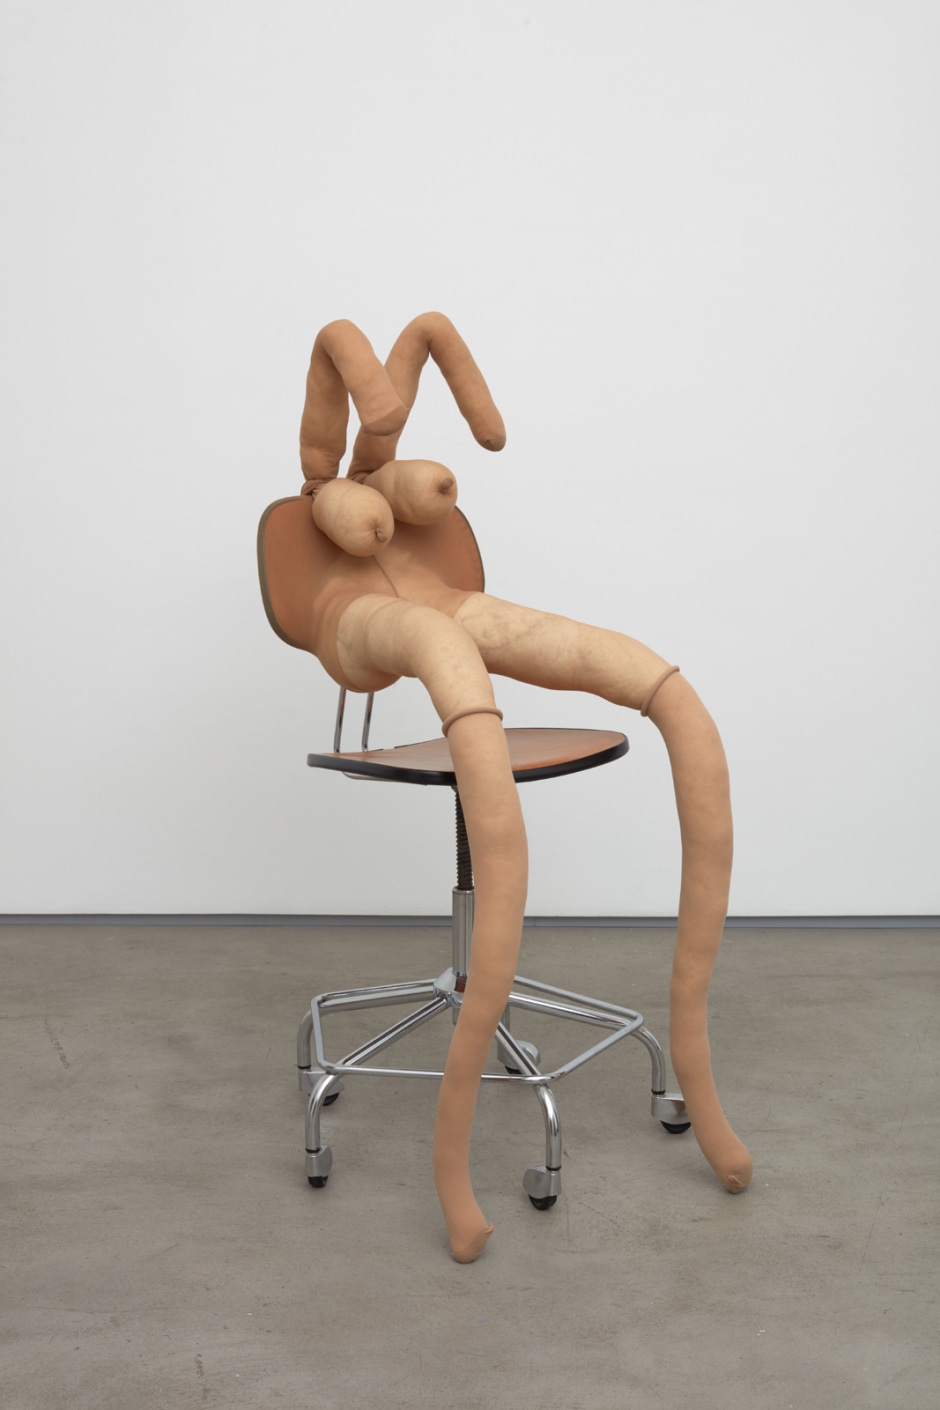 Titty Bunny, 2018  tights, fluff, wire, chair  114 x 53 x 67 cm  44 ⅞ x 20 ⅞ x 26 ⅜ in.